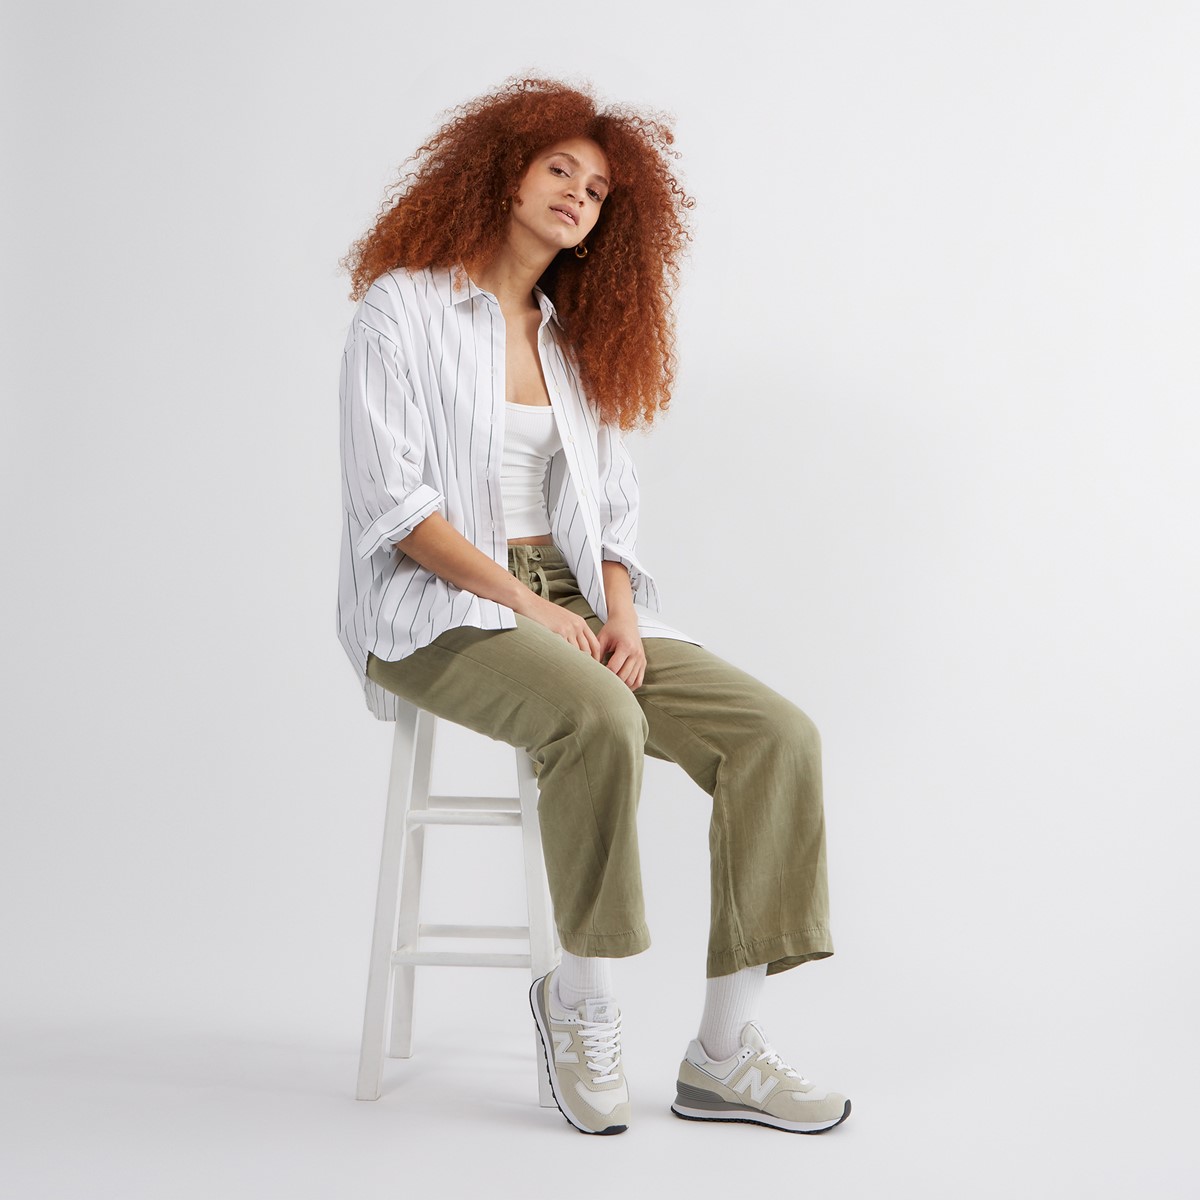 Alo x 01 classic Blakc/White, Women's Fashion, Footwear, Sneakers on  Carousell